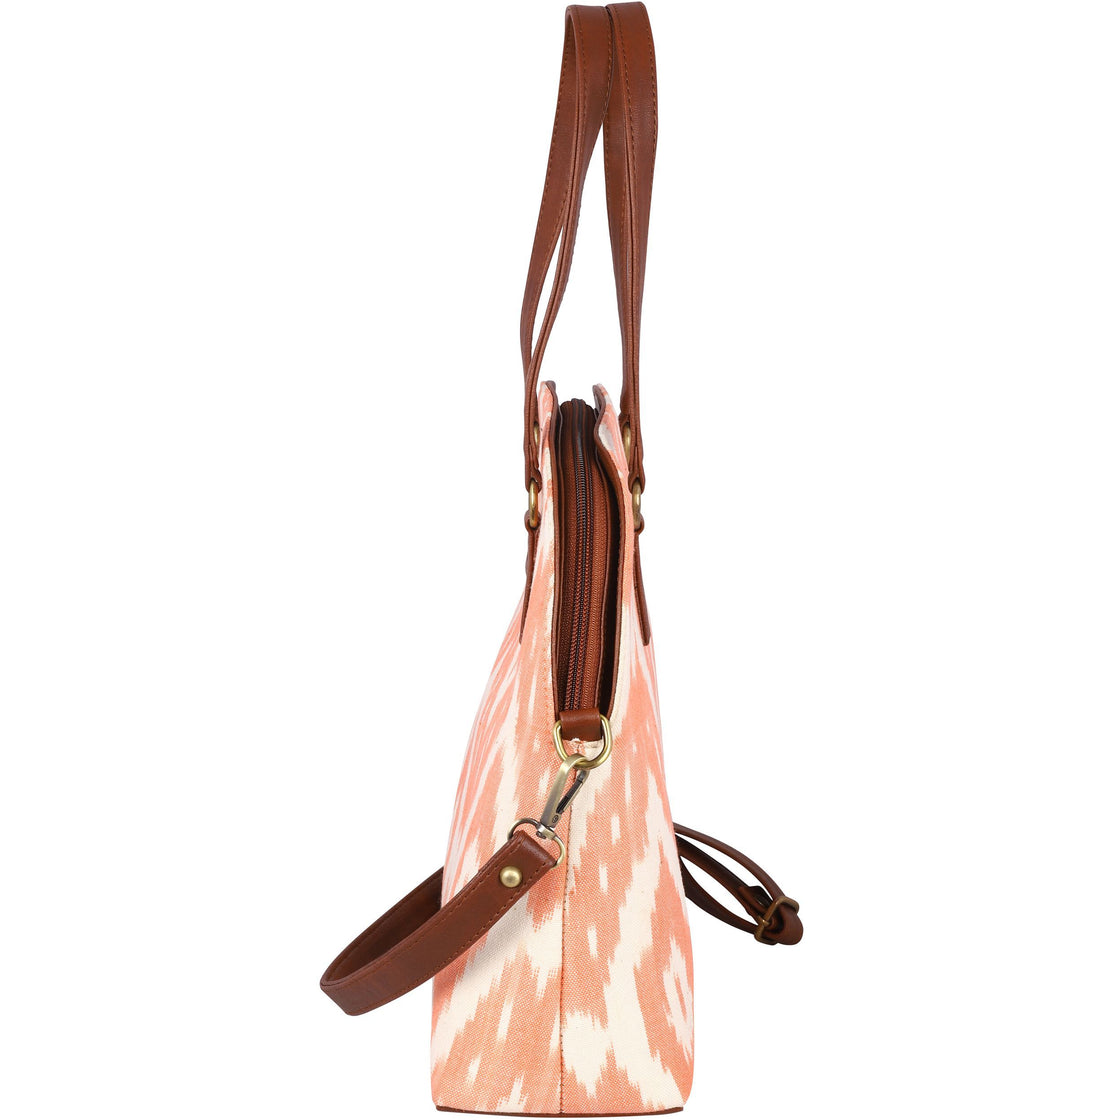 Handwoven ikat vegan leather handbag/crossbody bag